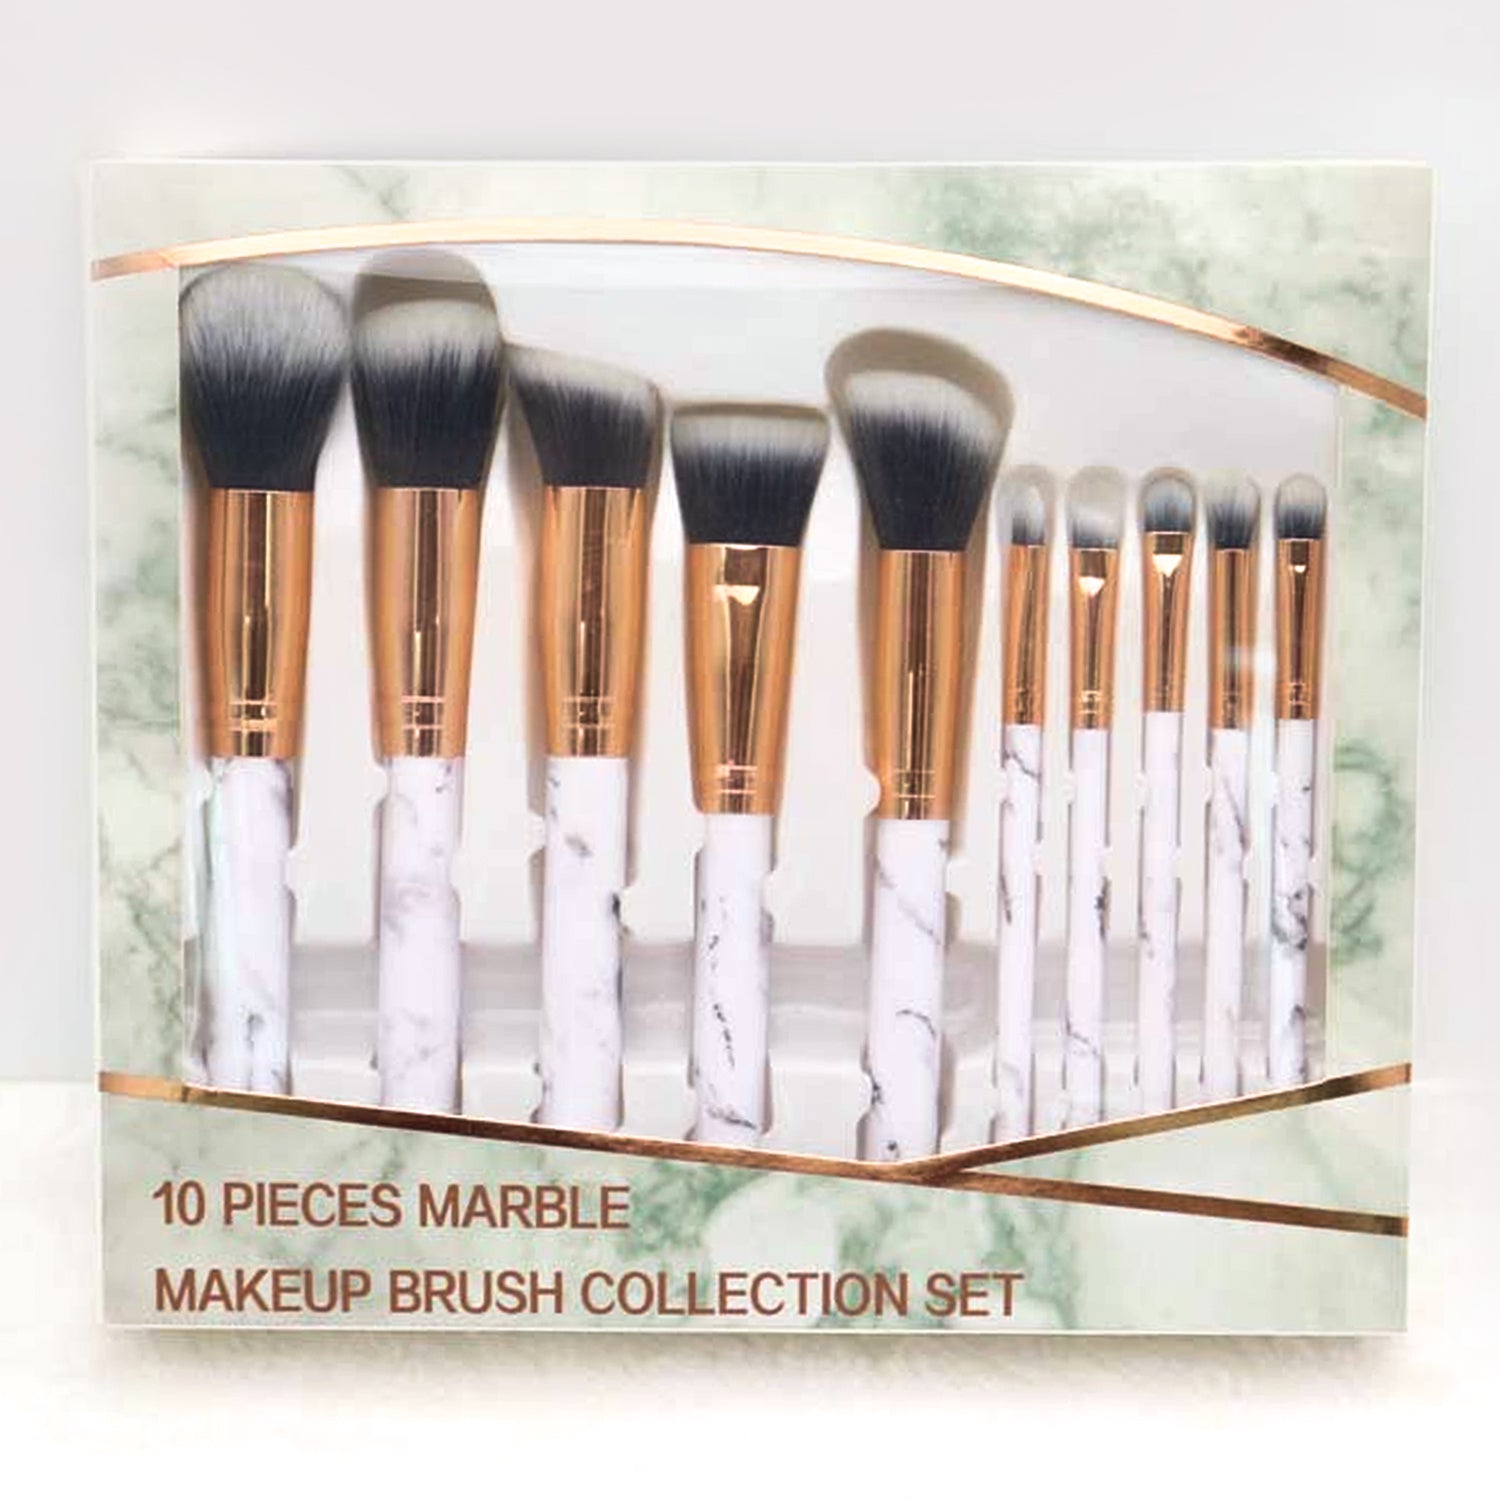 Professional 1/pcs Makeup Brushes Set